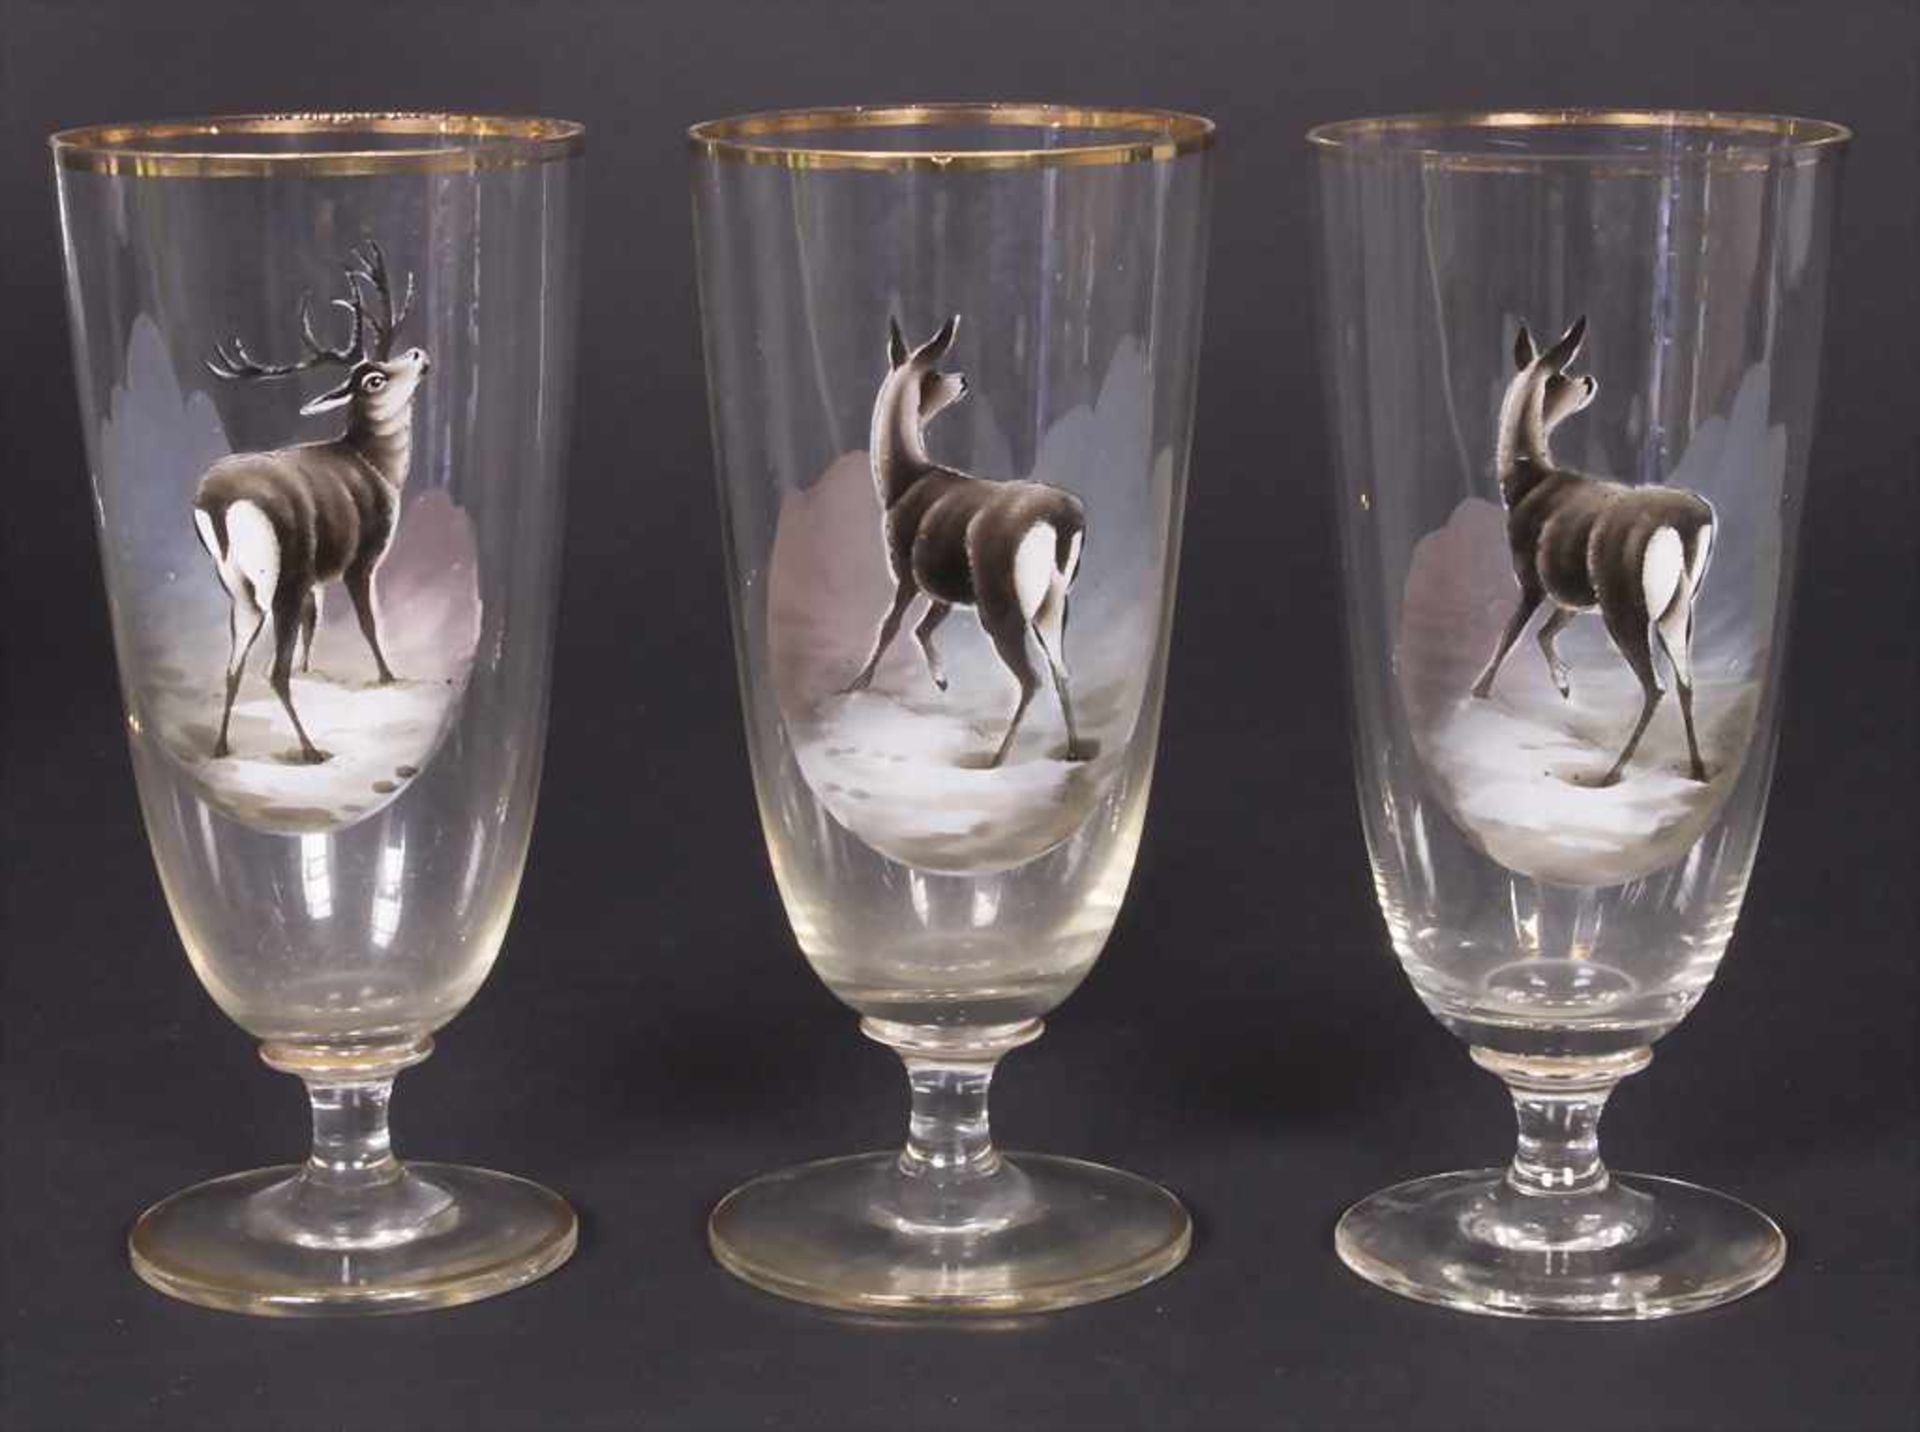 Saftkrug und 6 Gläser mit Hirschmotiven / A decanter and 6 glasses with deer decor, um 1900 - Image 3 of 6